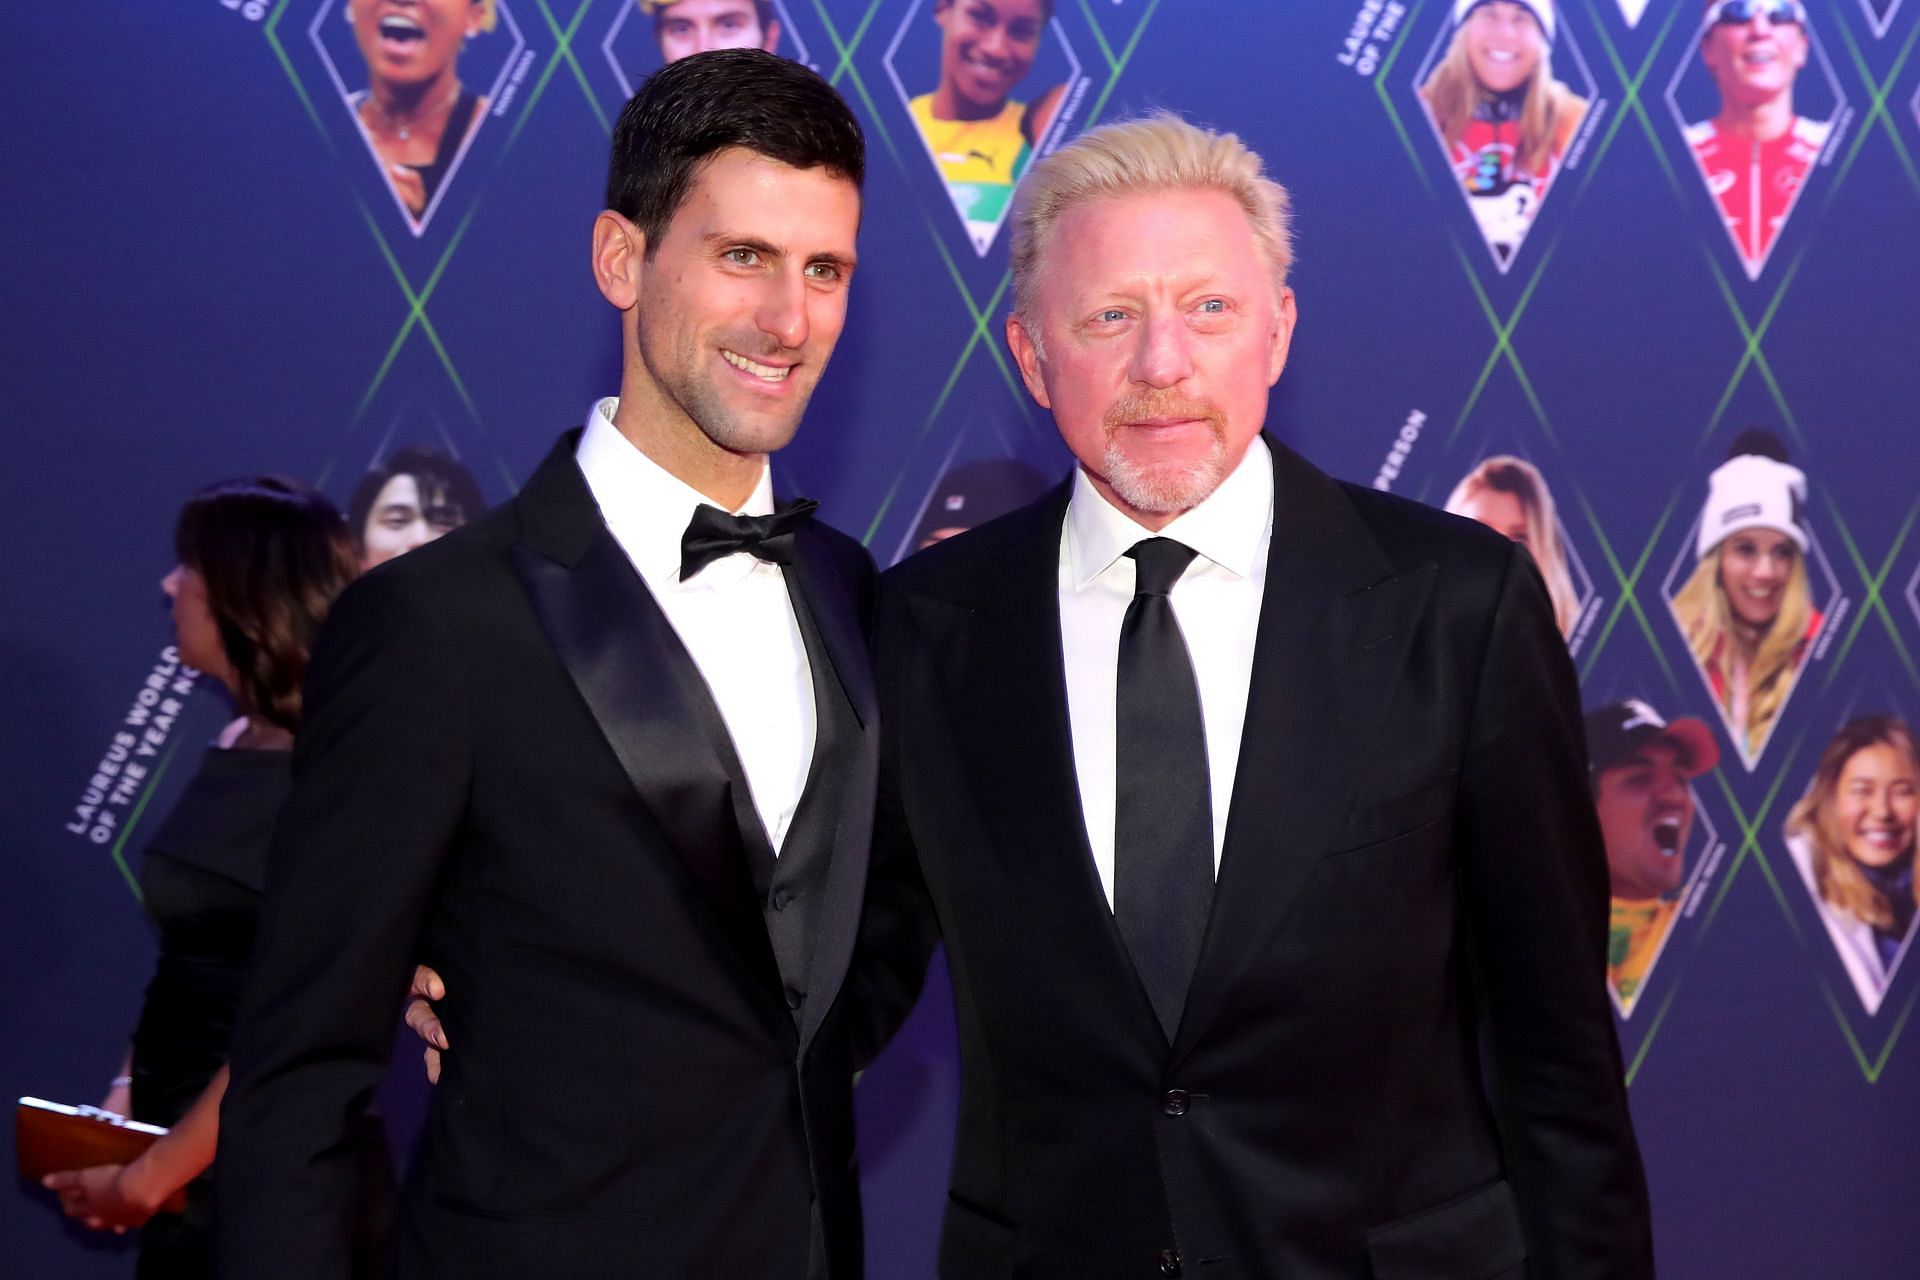 Boris Becker(R) coached Novak Djokovic(L) for 3 years